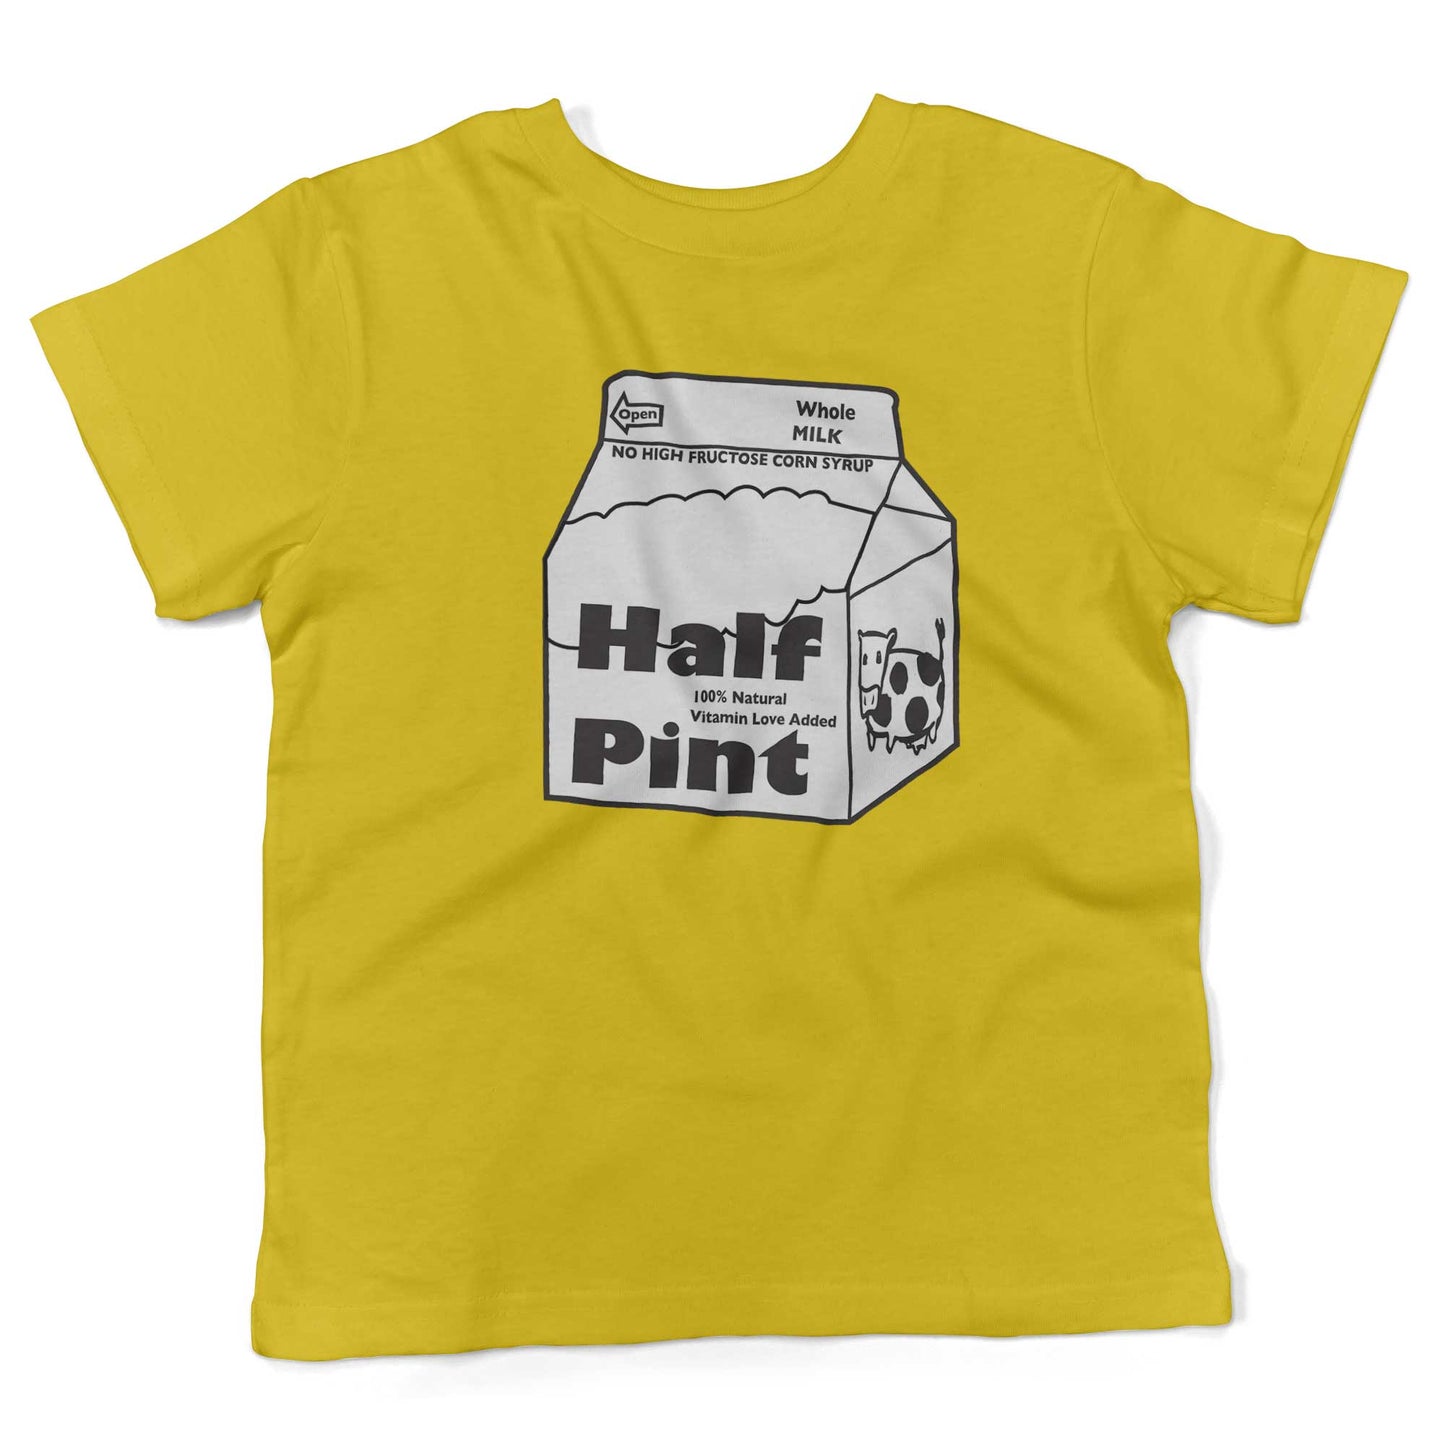 Half Pint Of Milk Toddler Shirt-Sunshine Yellow-2T